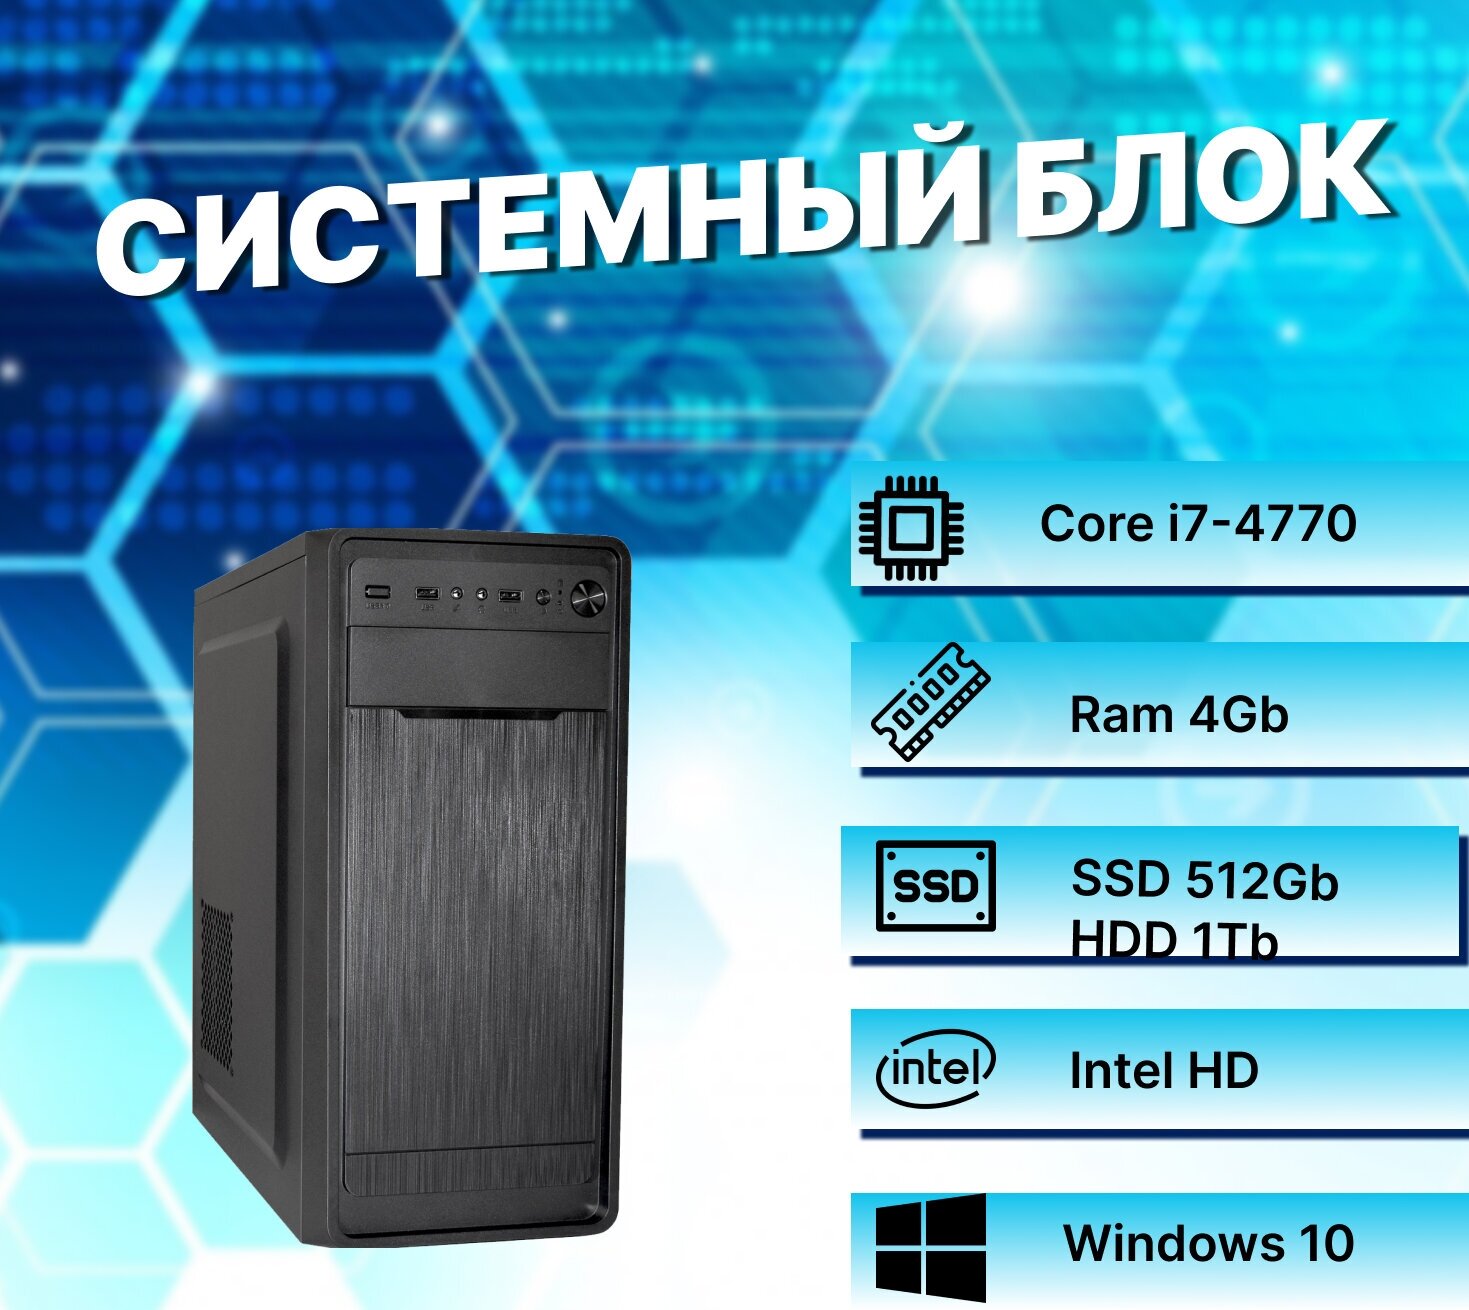 Системный блок Intel Core i7-4770 (3.4ГГц)/ RAM 4Gb/ SSD 512Gb/ HDD 1Tb/ Intel HD/ Windows 10 Pro